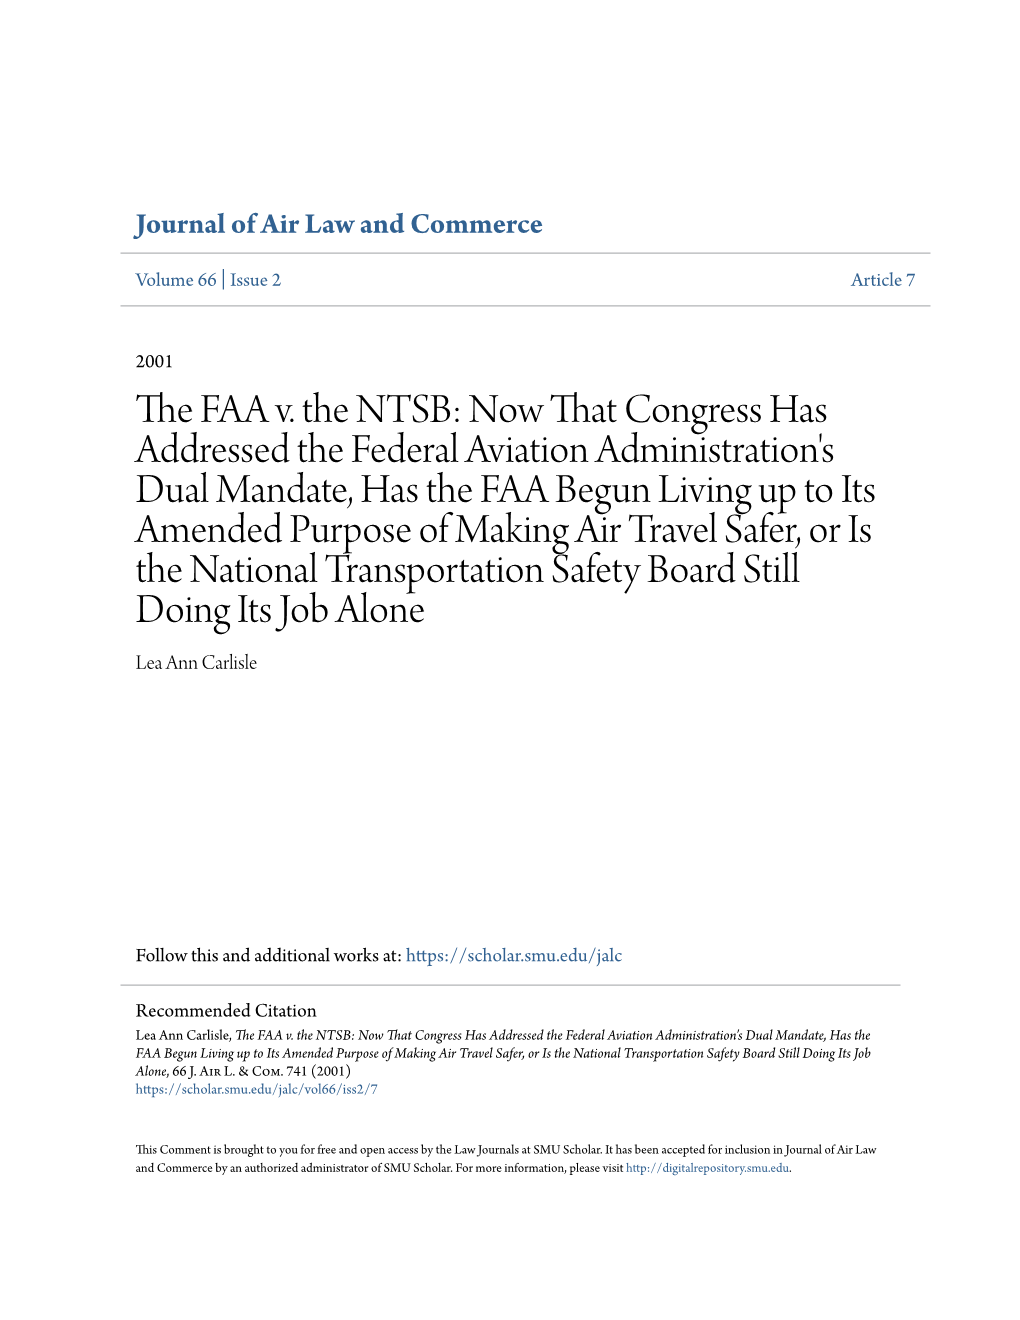 The FAA V. the NTSB